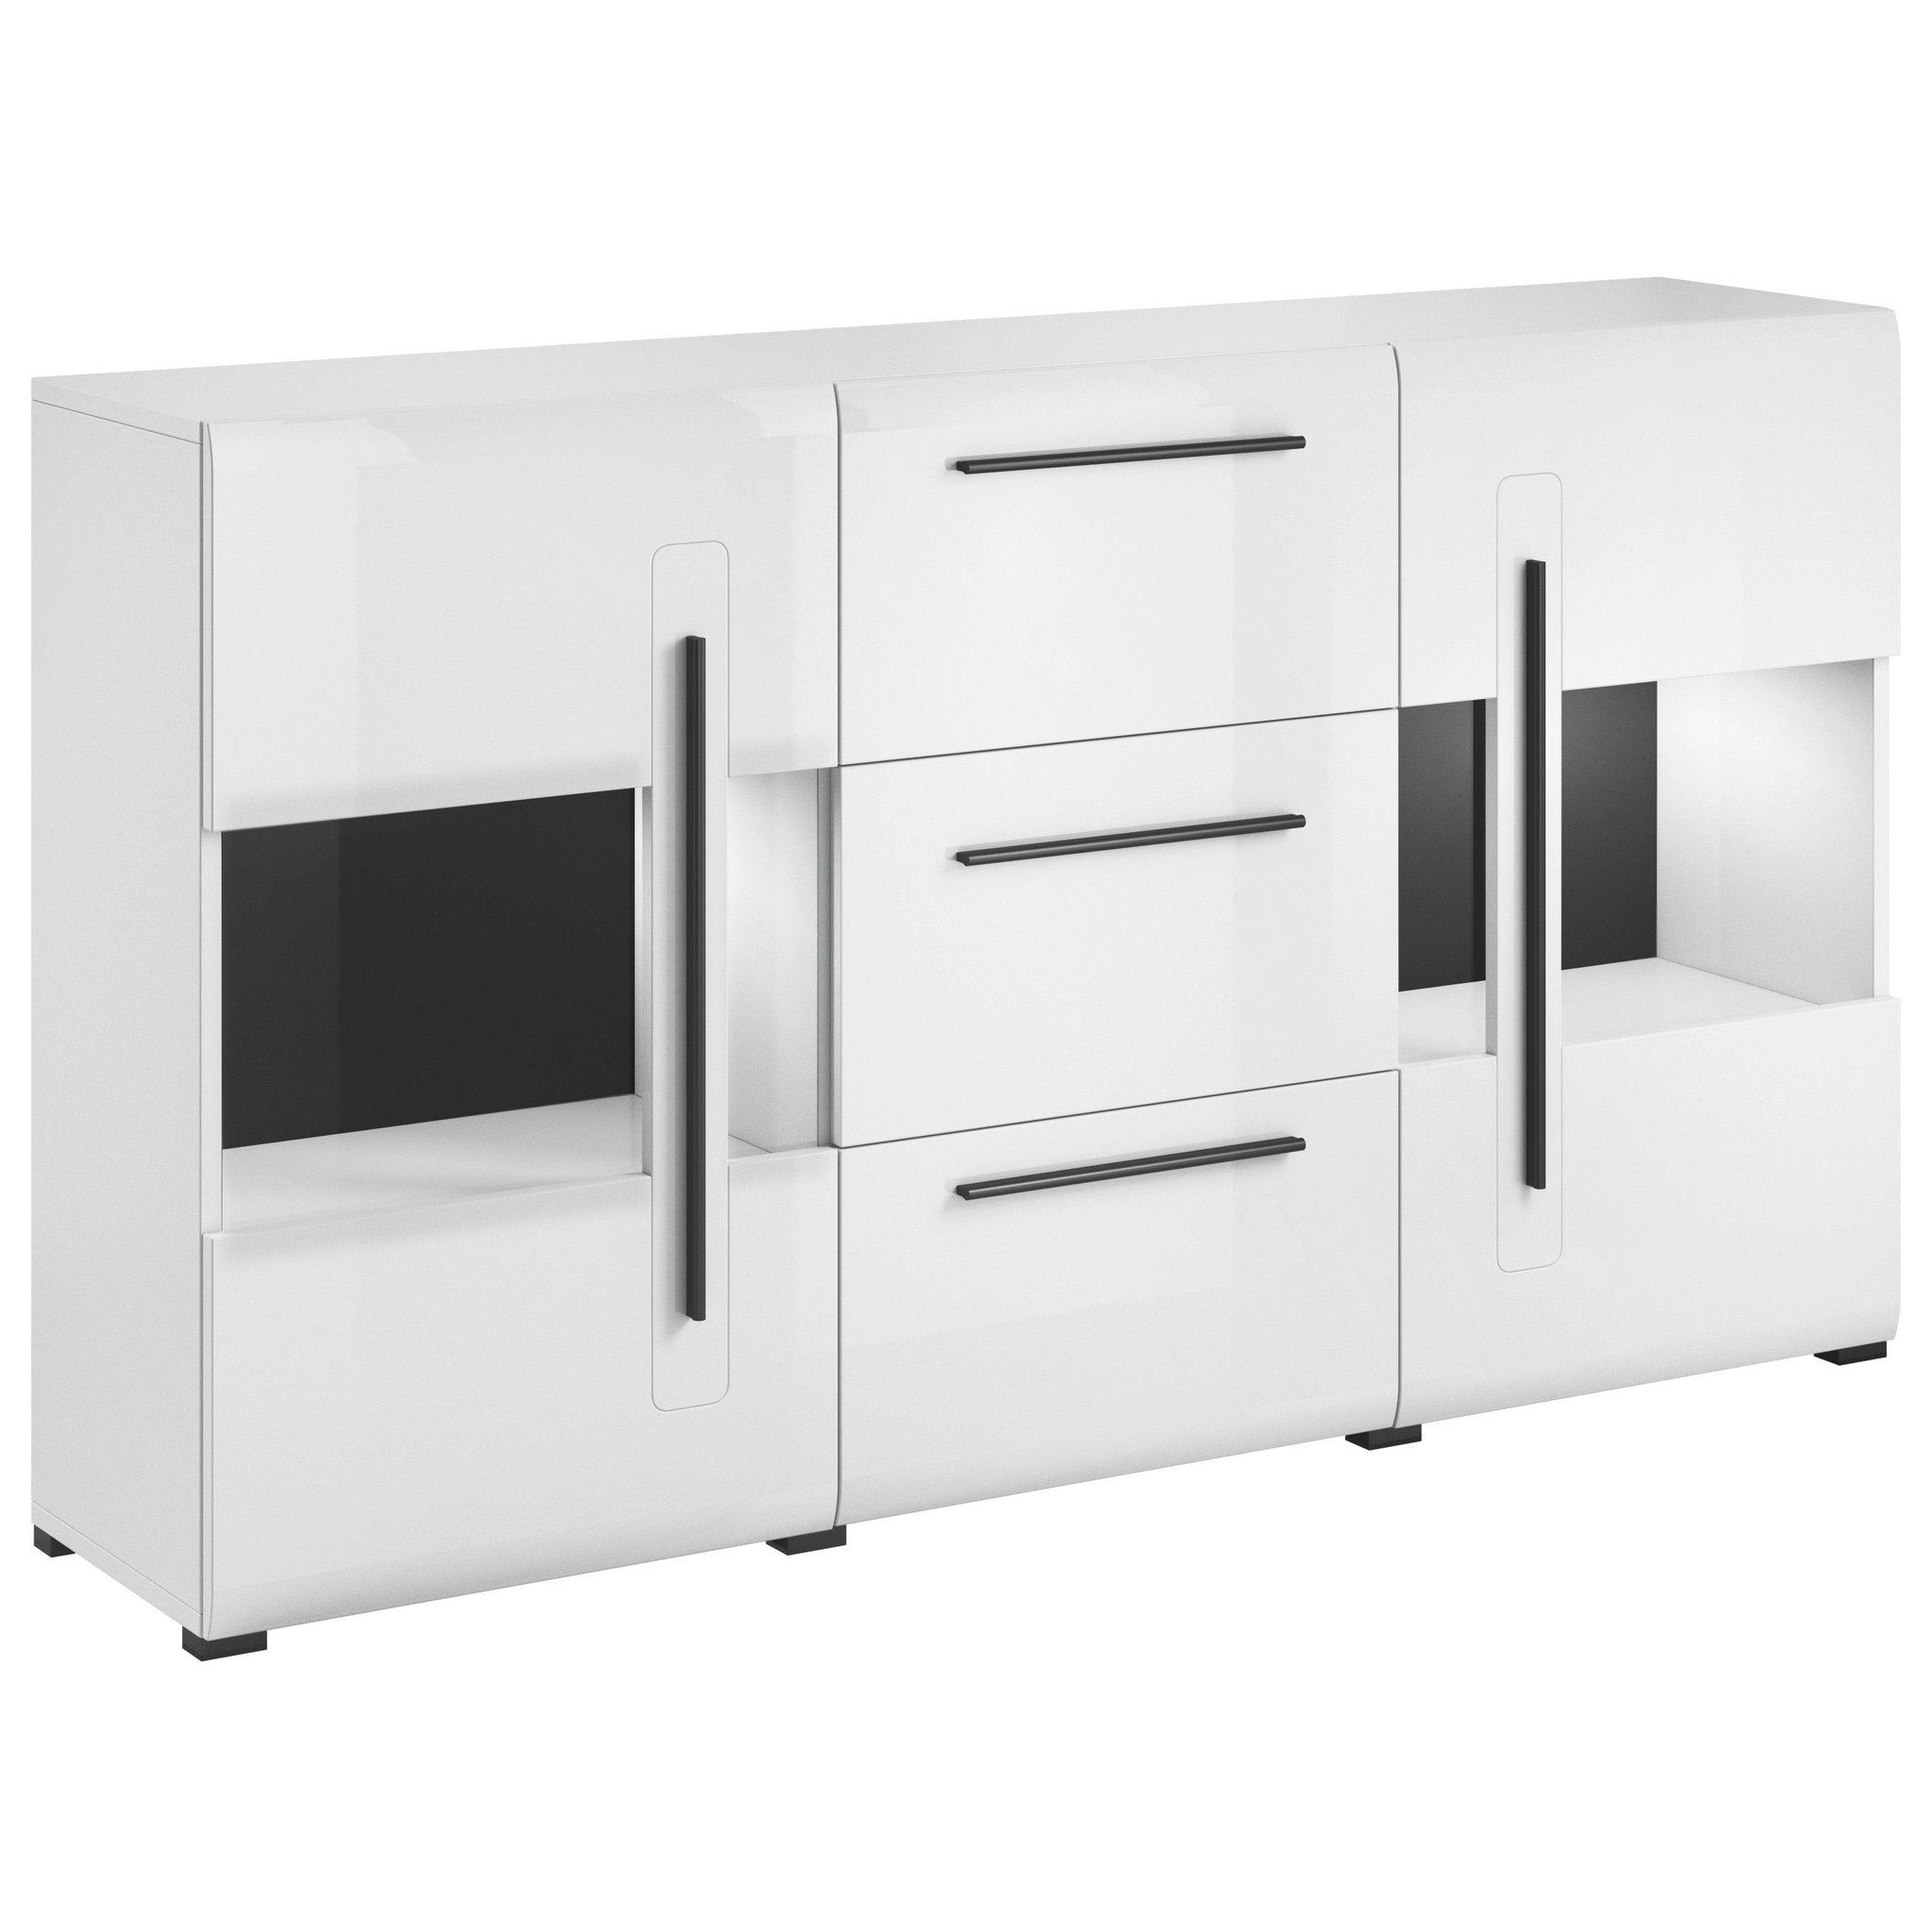 Tulsa 28 Display Sideboard Cabinet White Gloss Living Display Sideboard Cabinet 